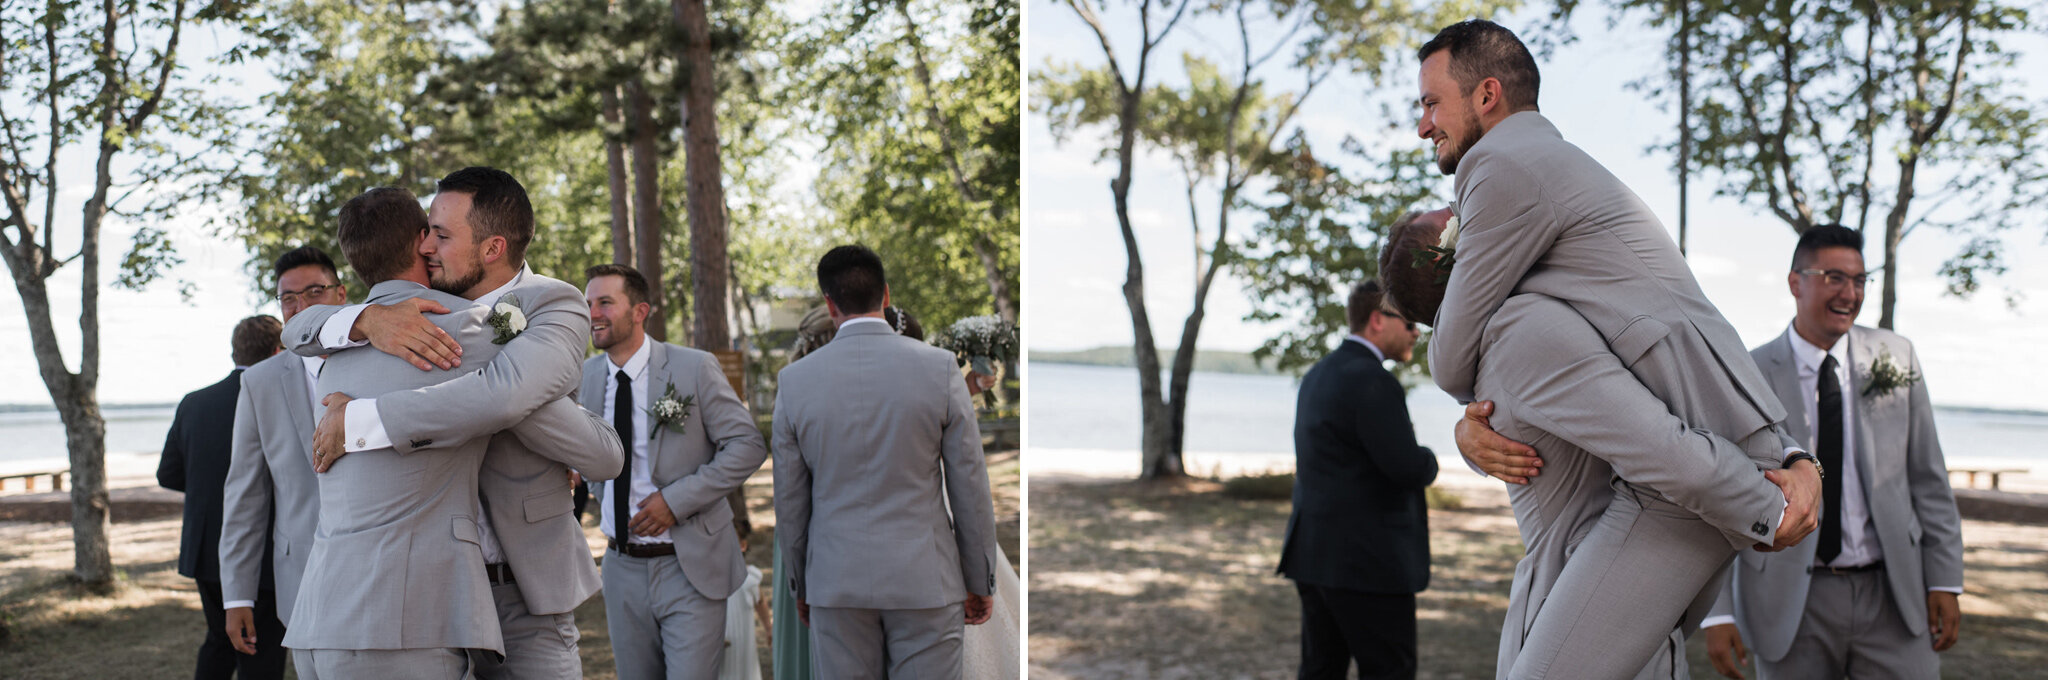 596-groomsmen-post-ceremony-reaction-outdoor-lake-wedding-ontario-toronto-photography.jpg